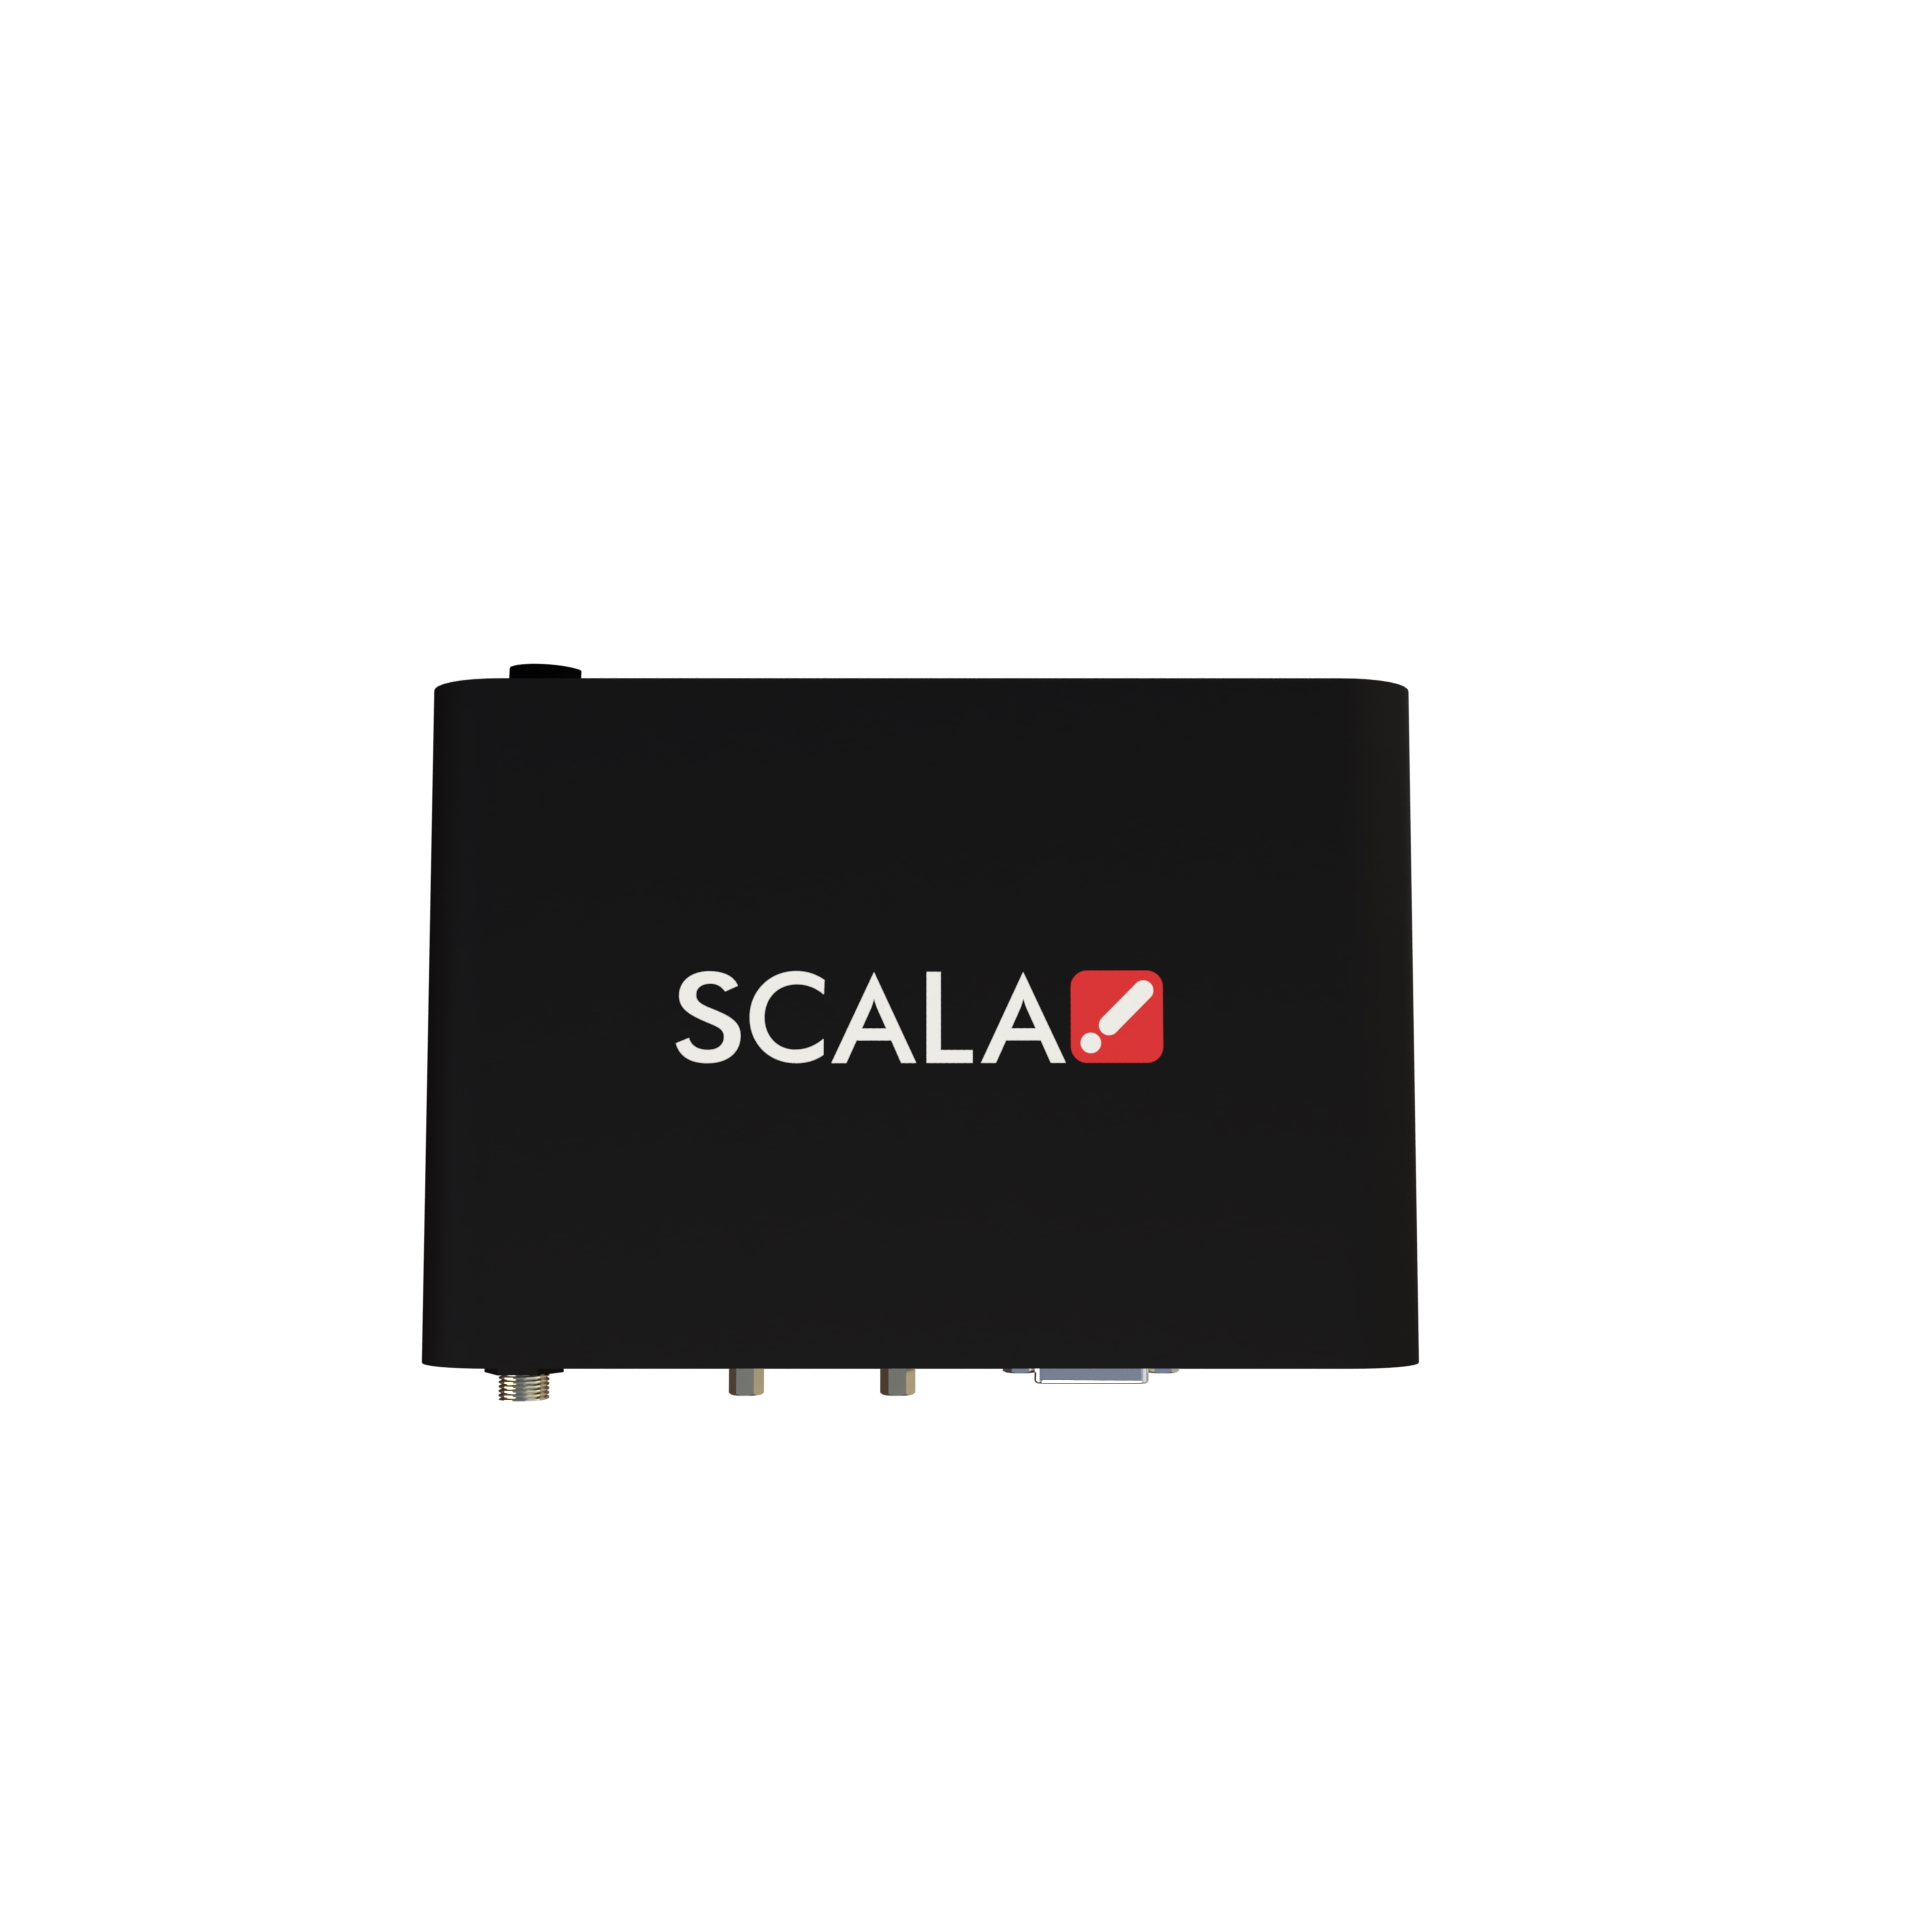 Scala Media Player R top